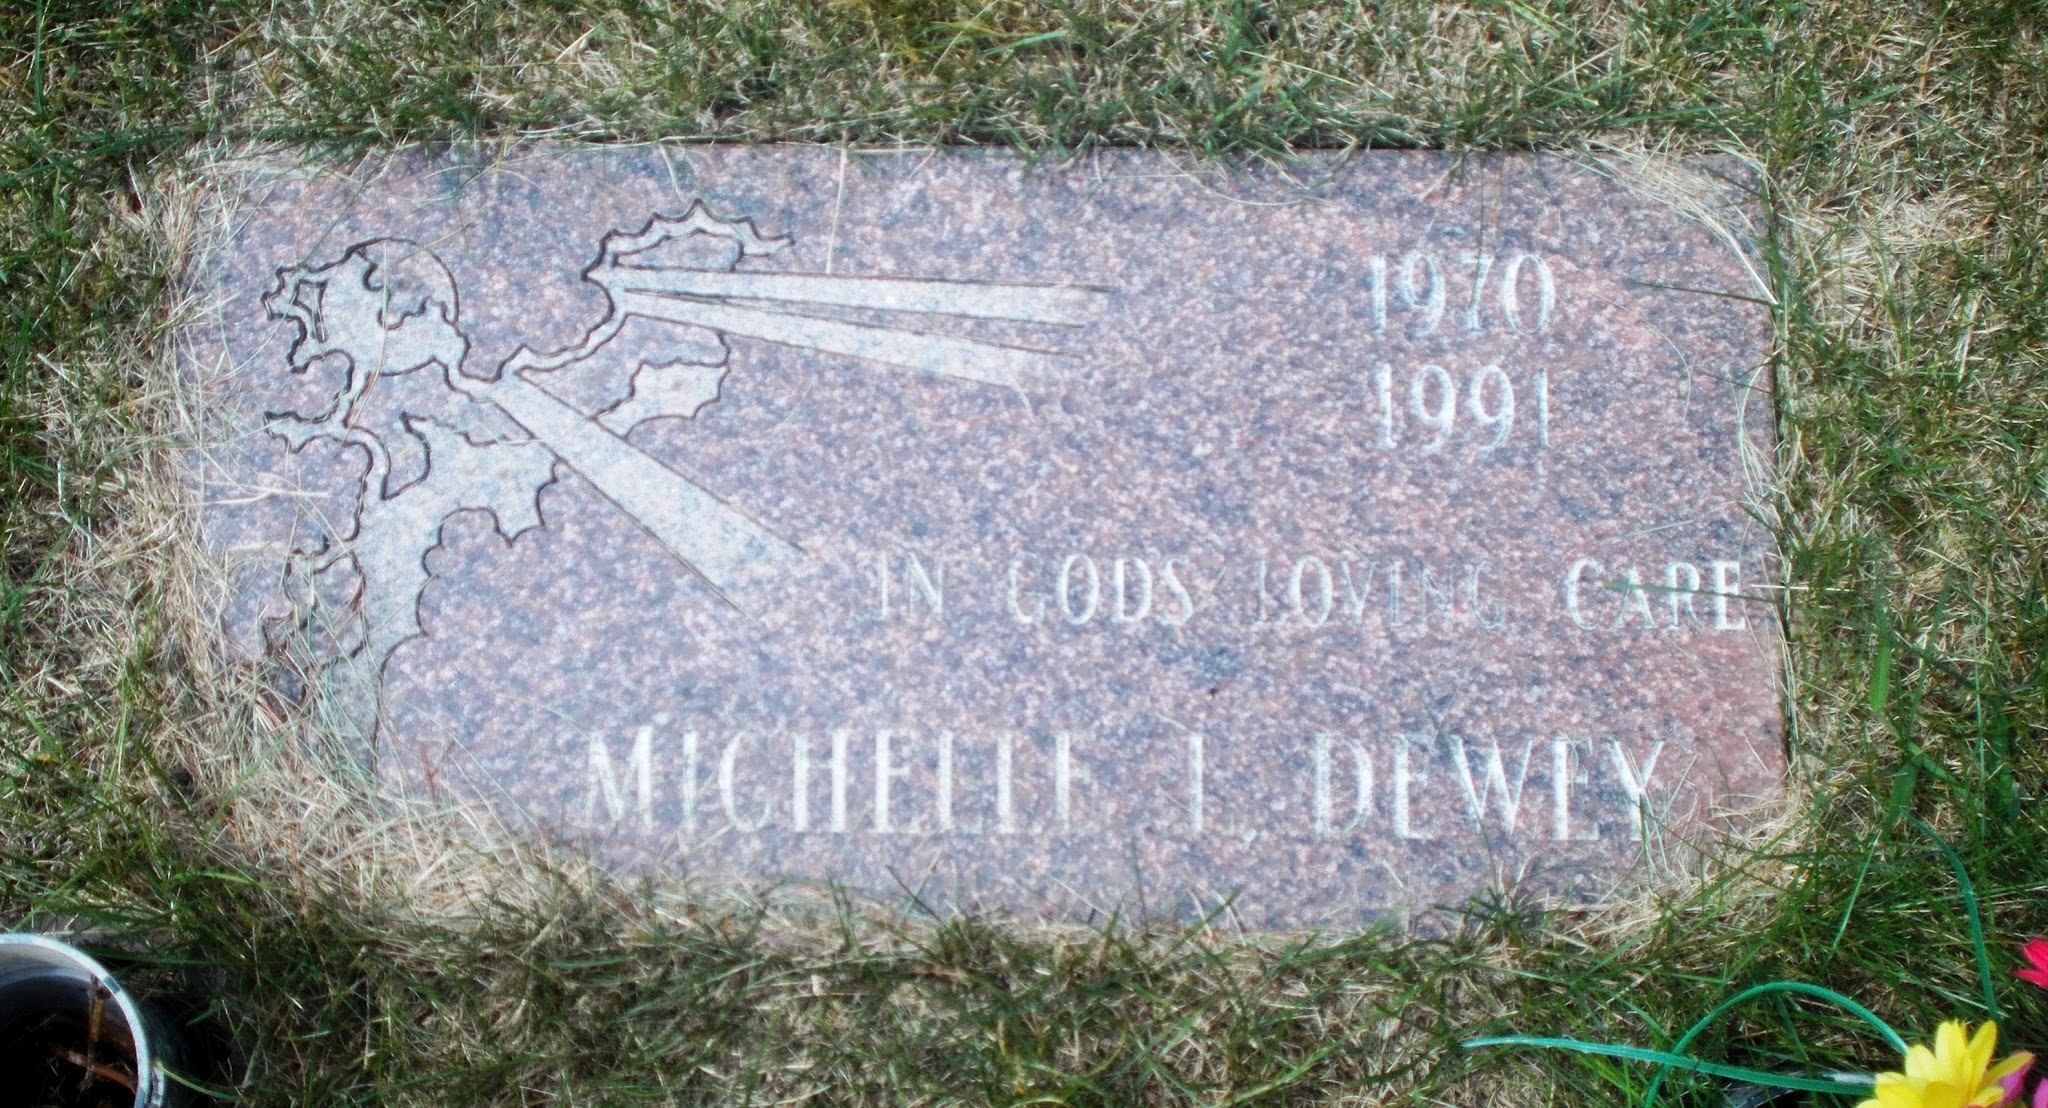 Michelle I Dewey